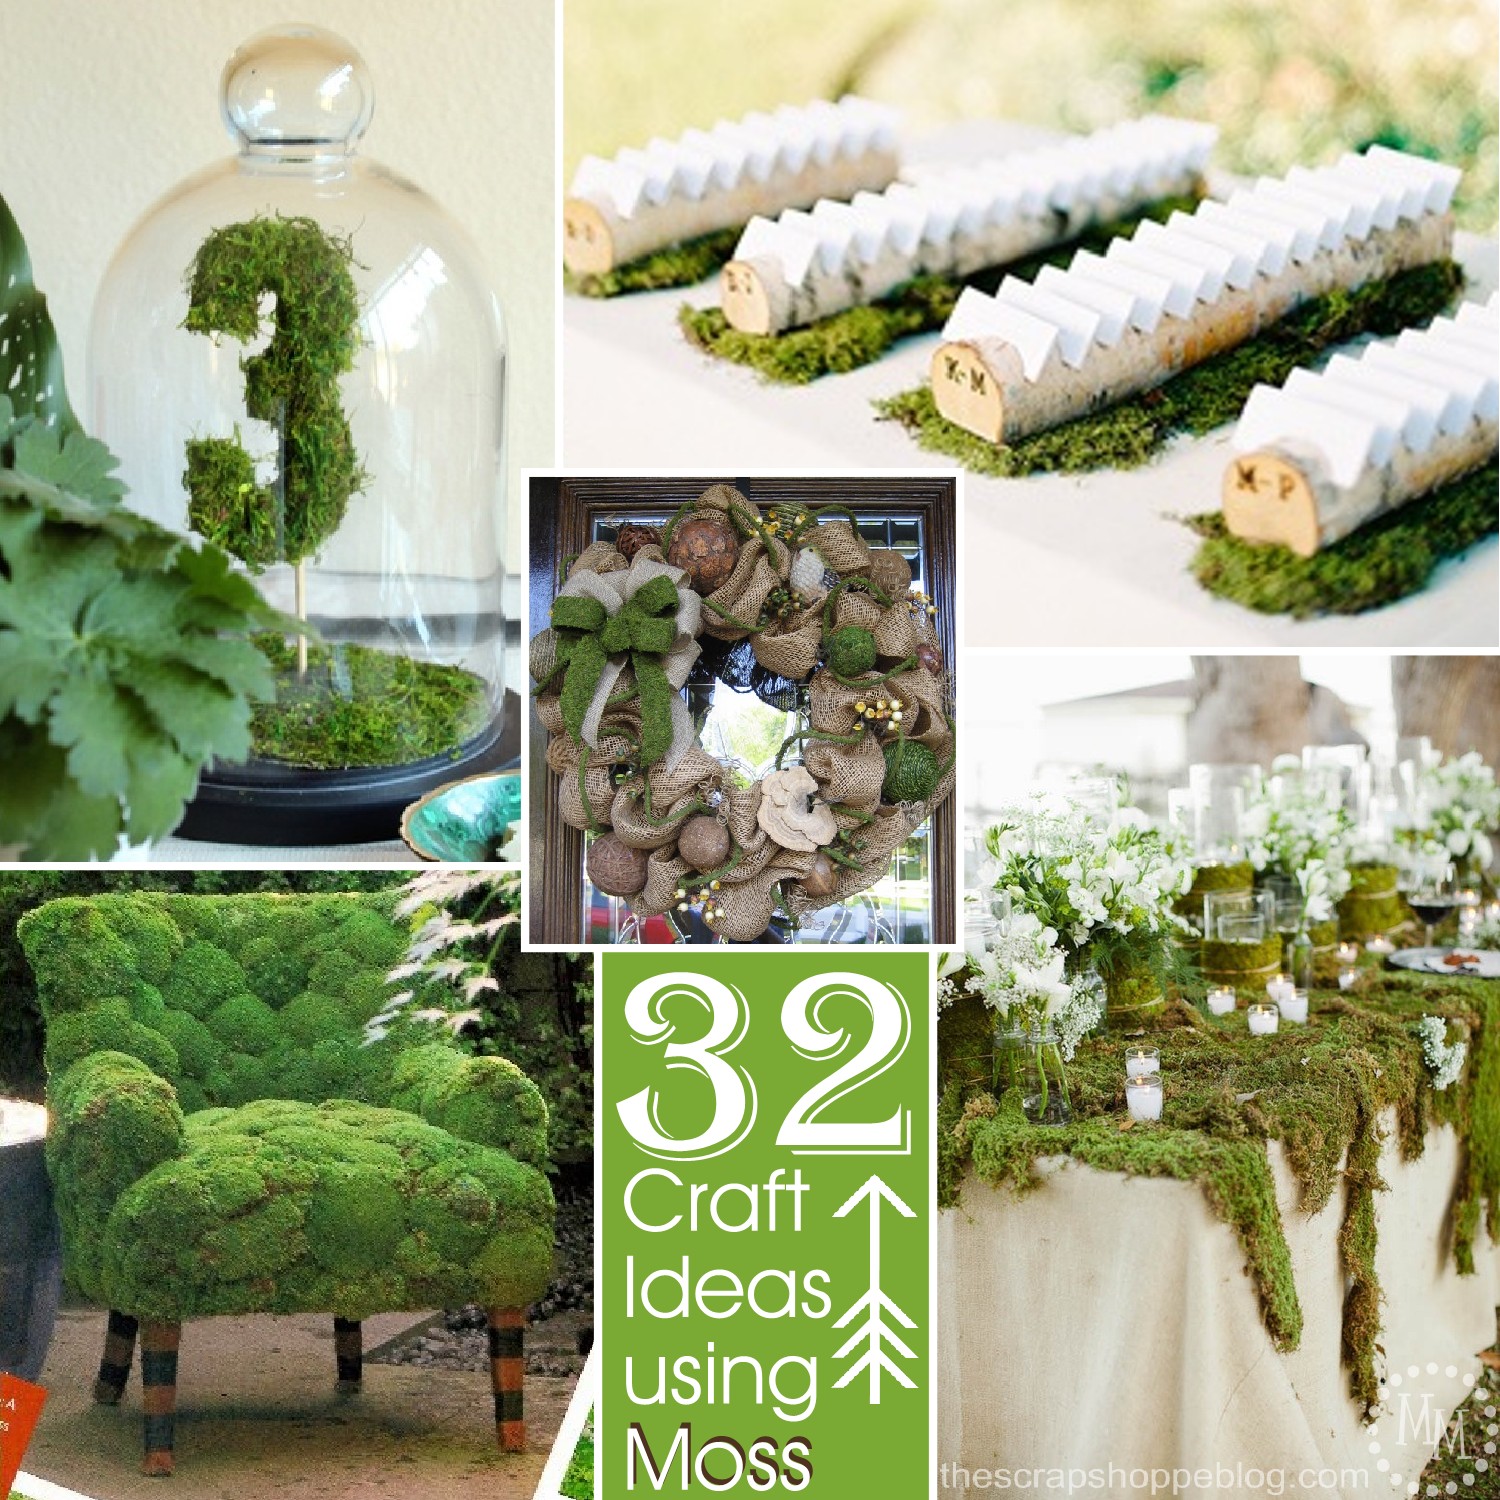 12 Easy Craft Ideas Using Moss  Easy crafts, Crafts, Diy craft